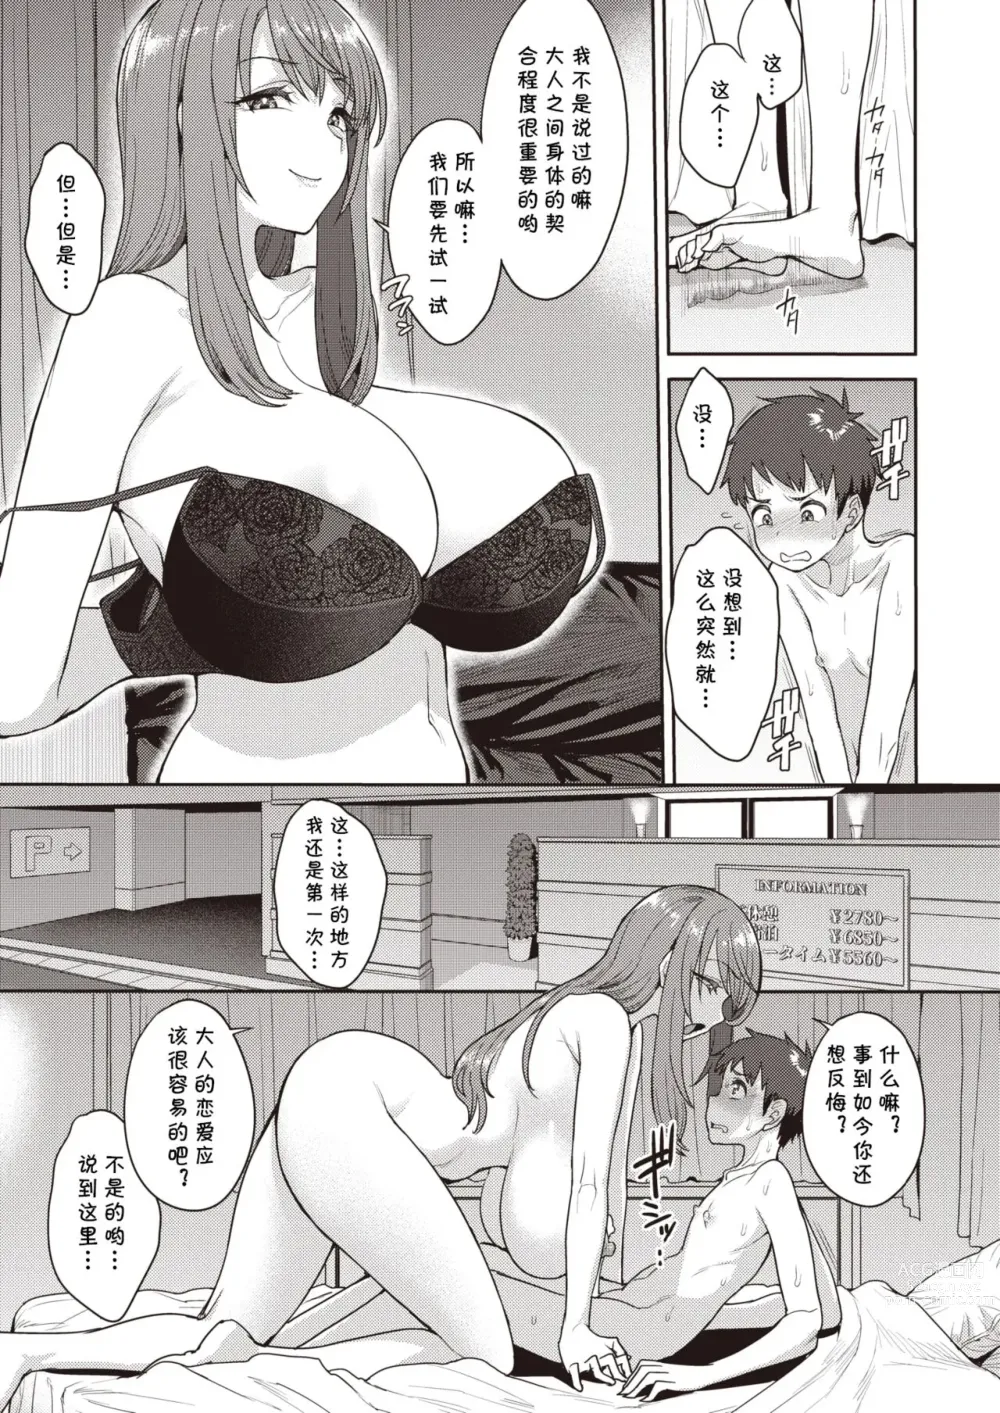 Page 4 of manga 大人の恋愛テクニック